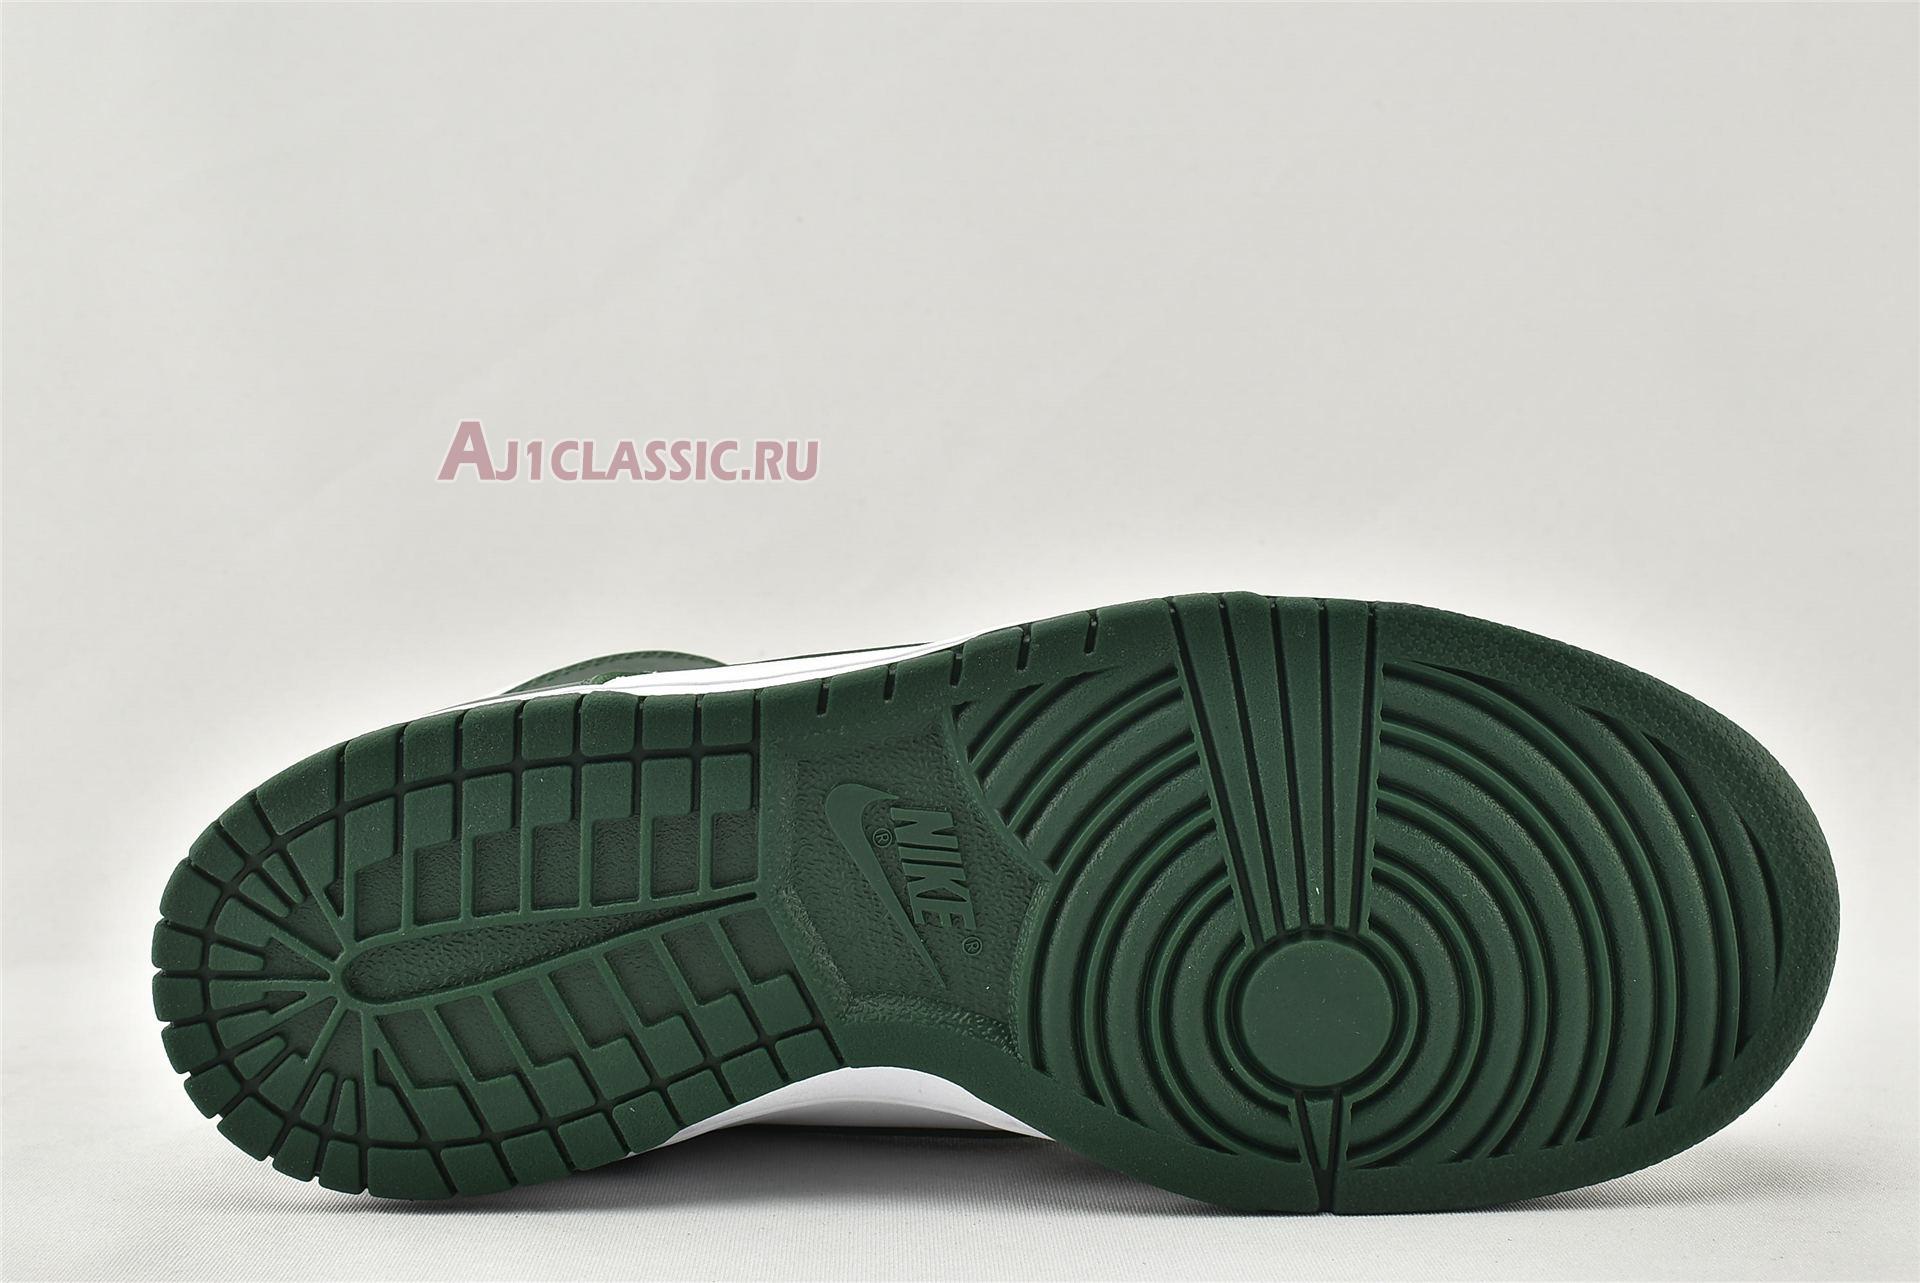 Nike Dunk High SP "Spartan Green" CZ8149-100